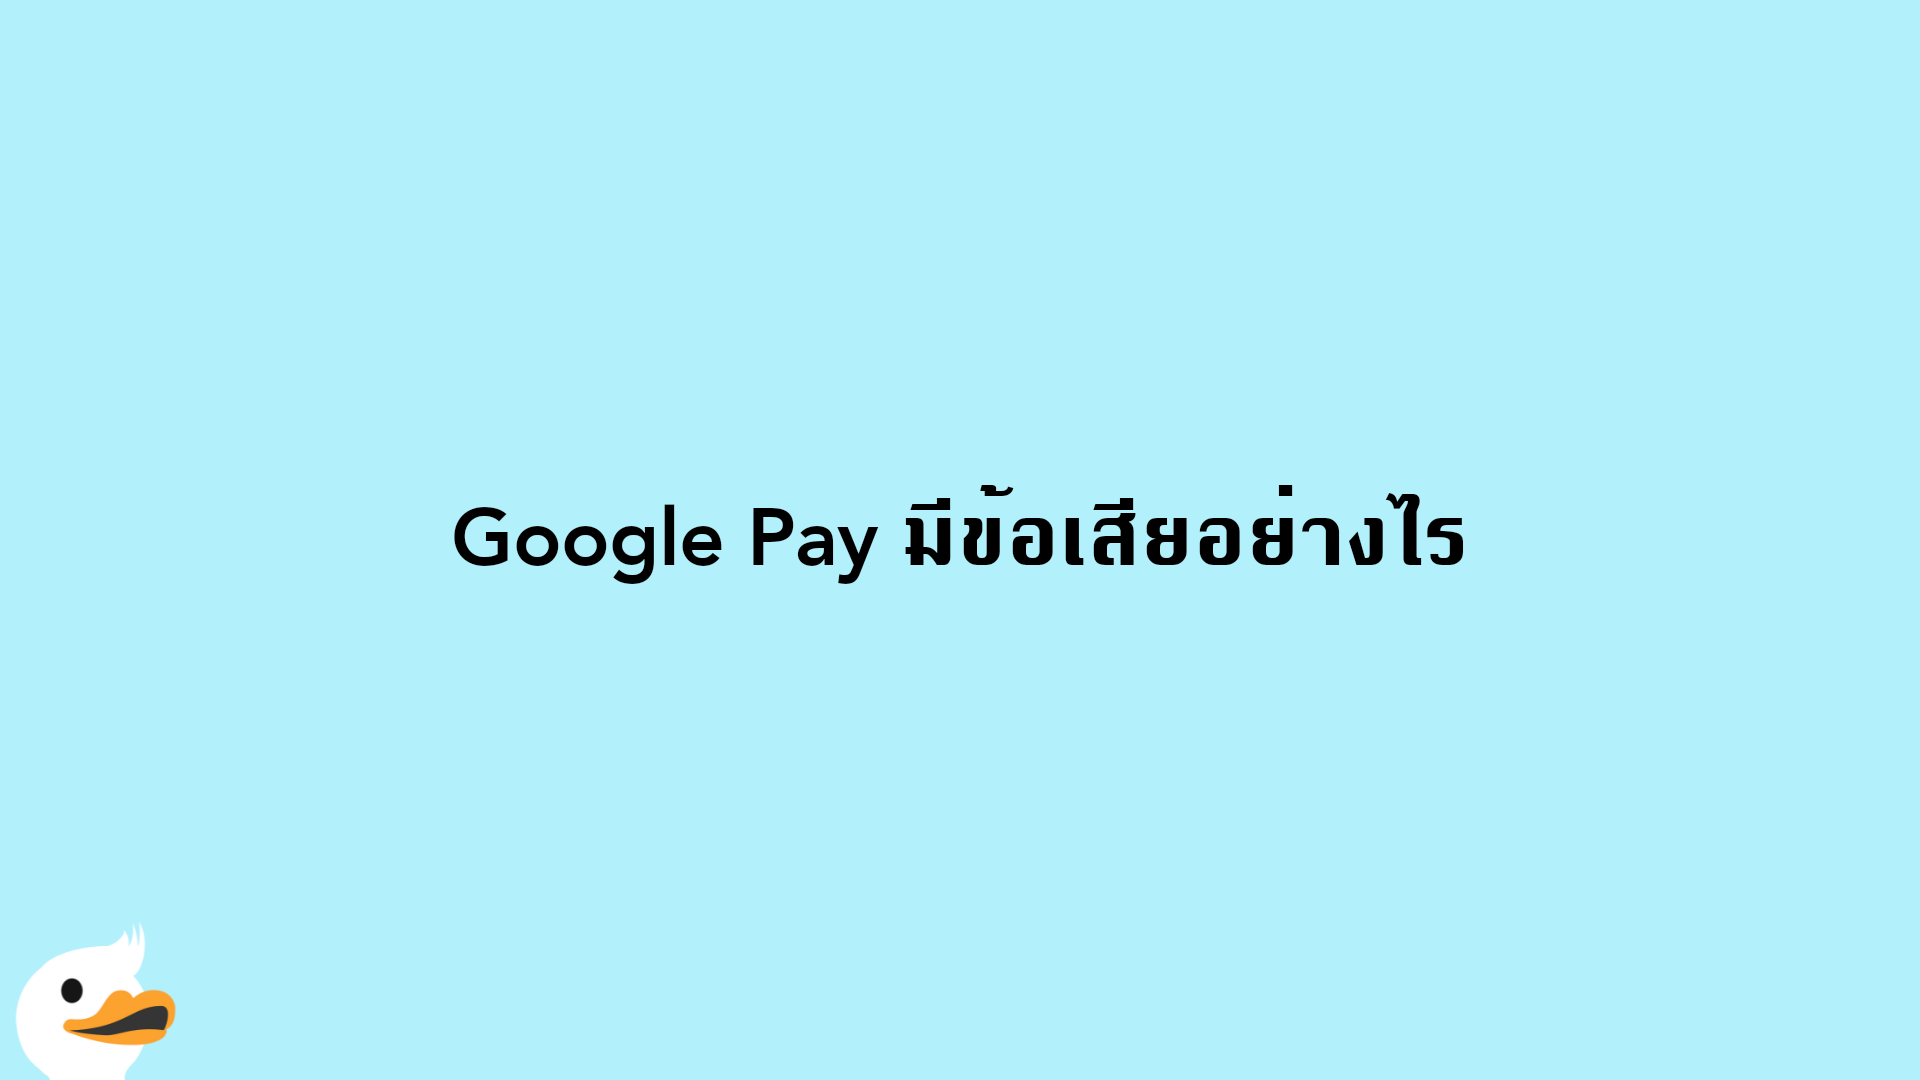 Google Pay มีข้อเสียอย่างไร